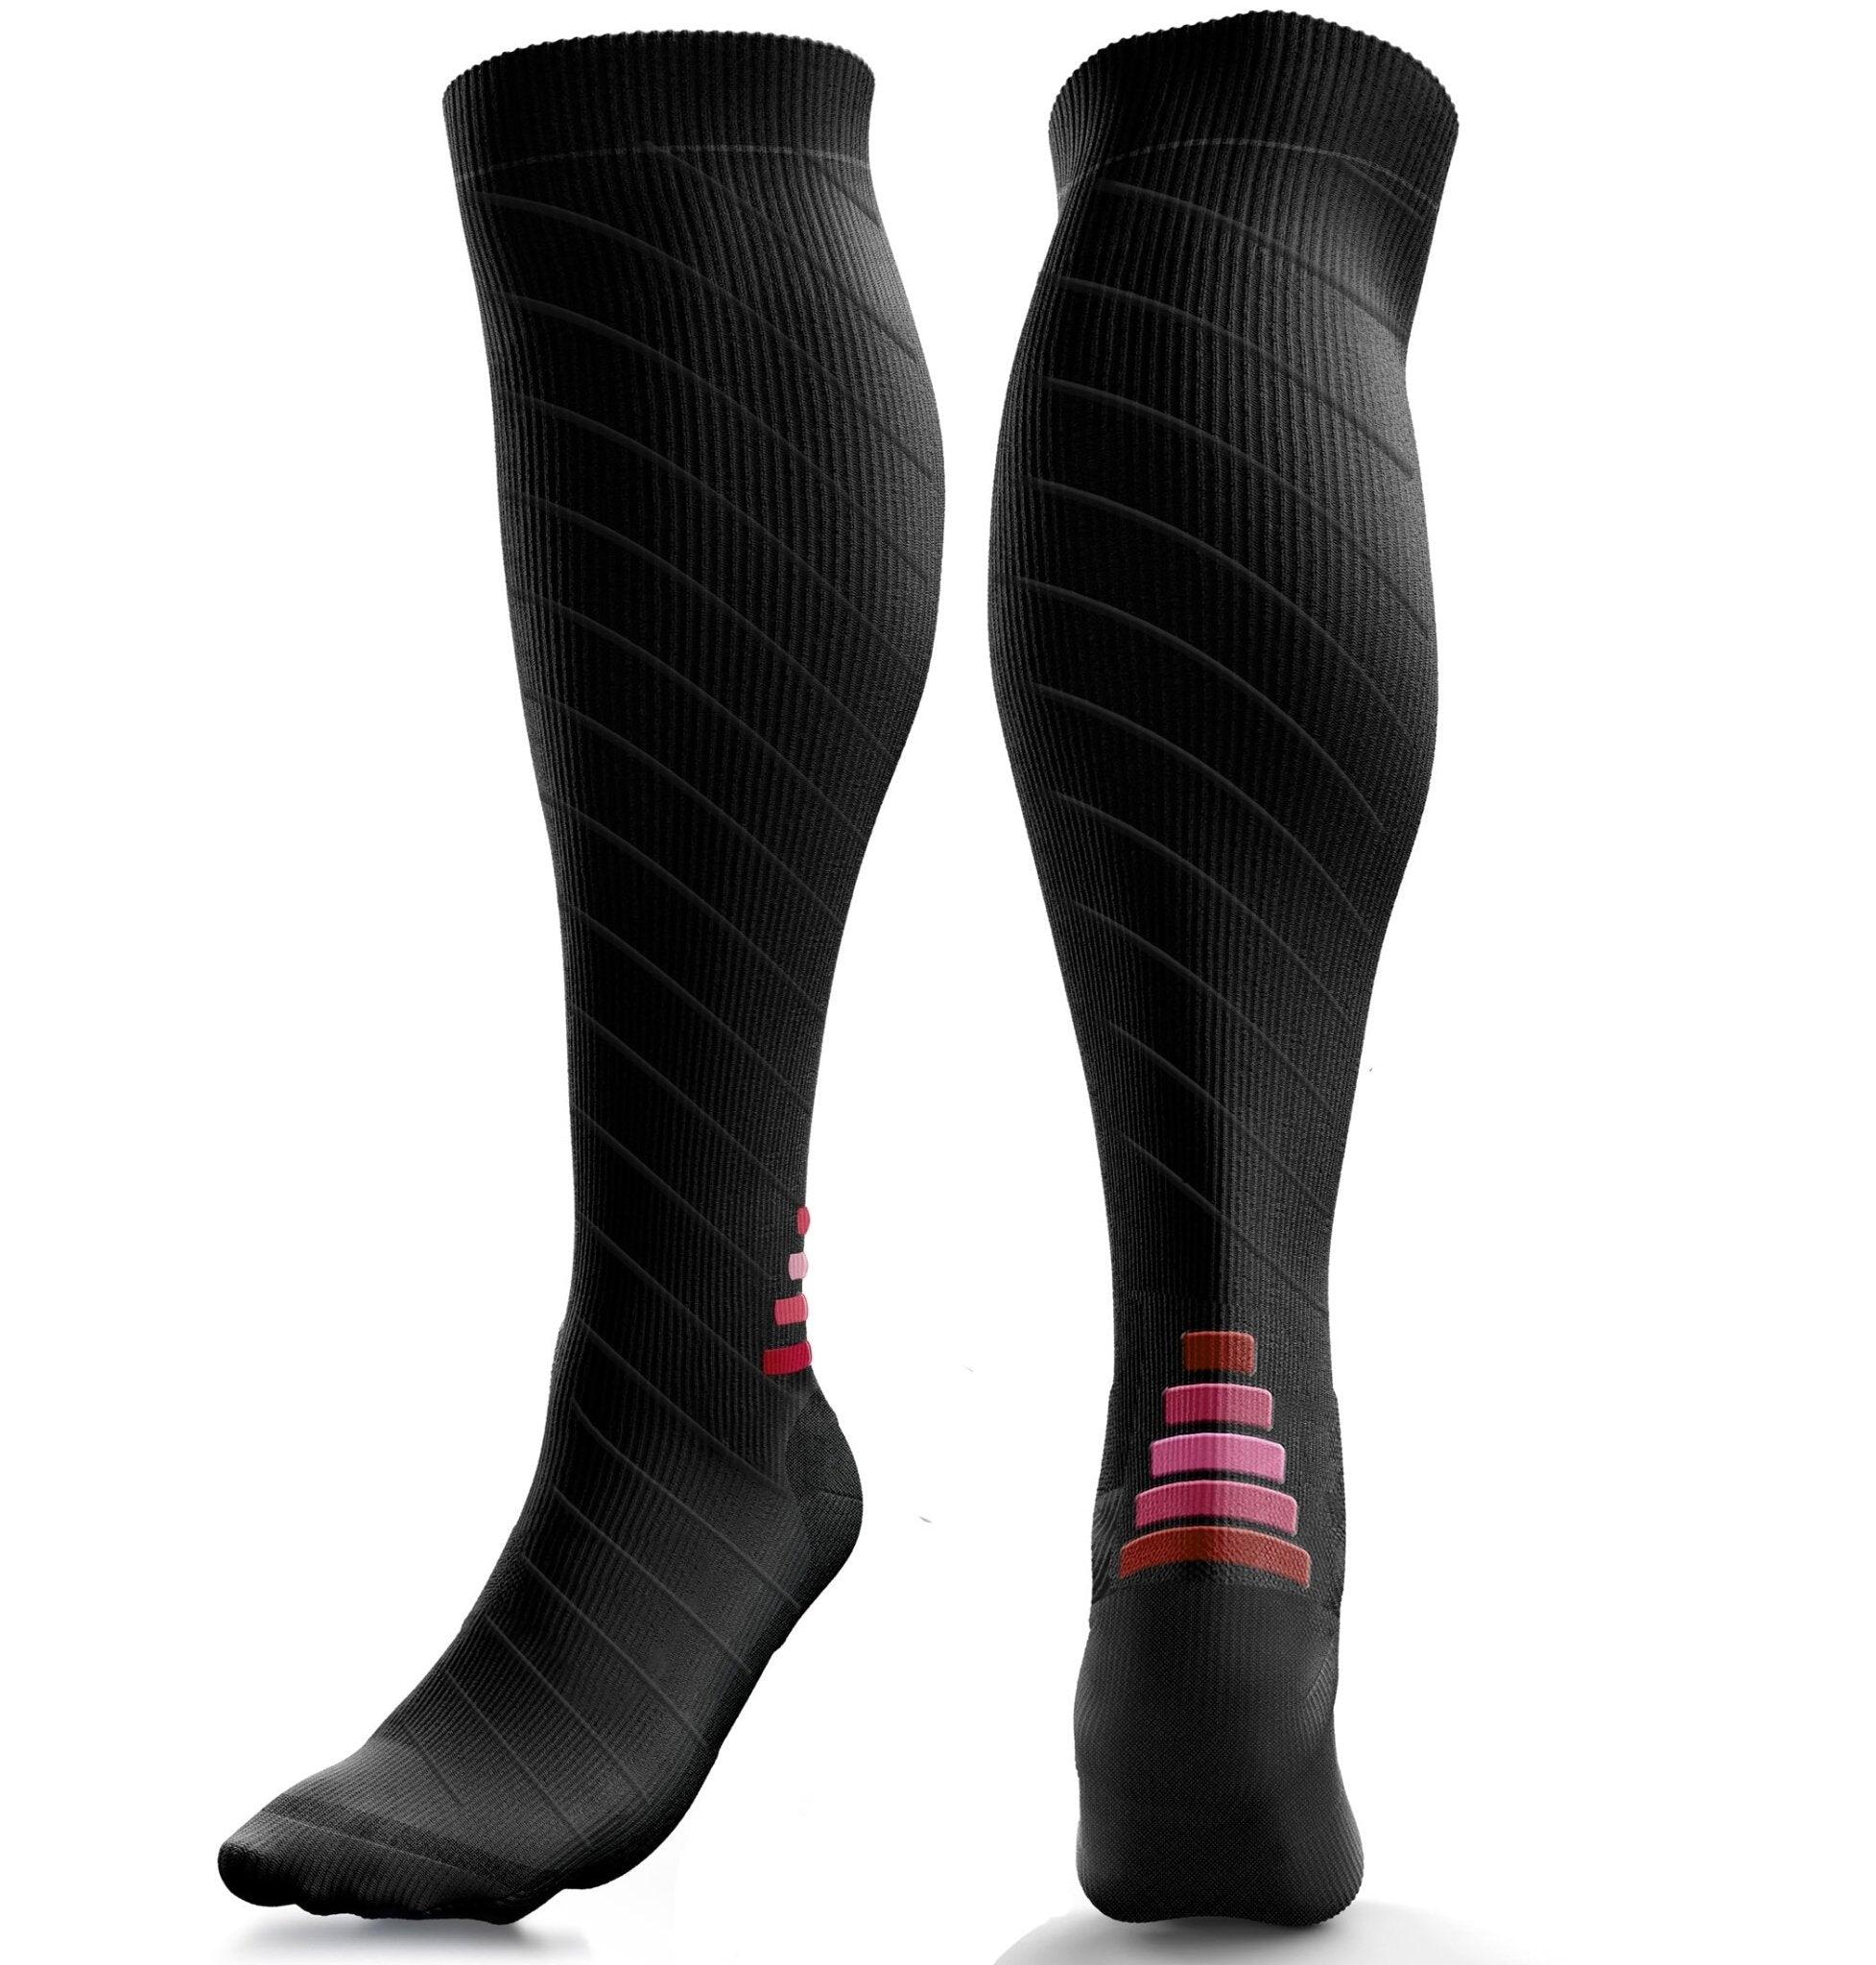 AZENGEAR Calf Support Compression Socks for Men & Women (20-30 mmHg)(Black w/Red)